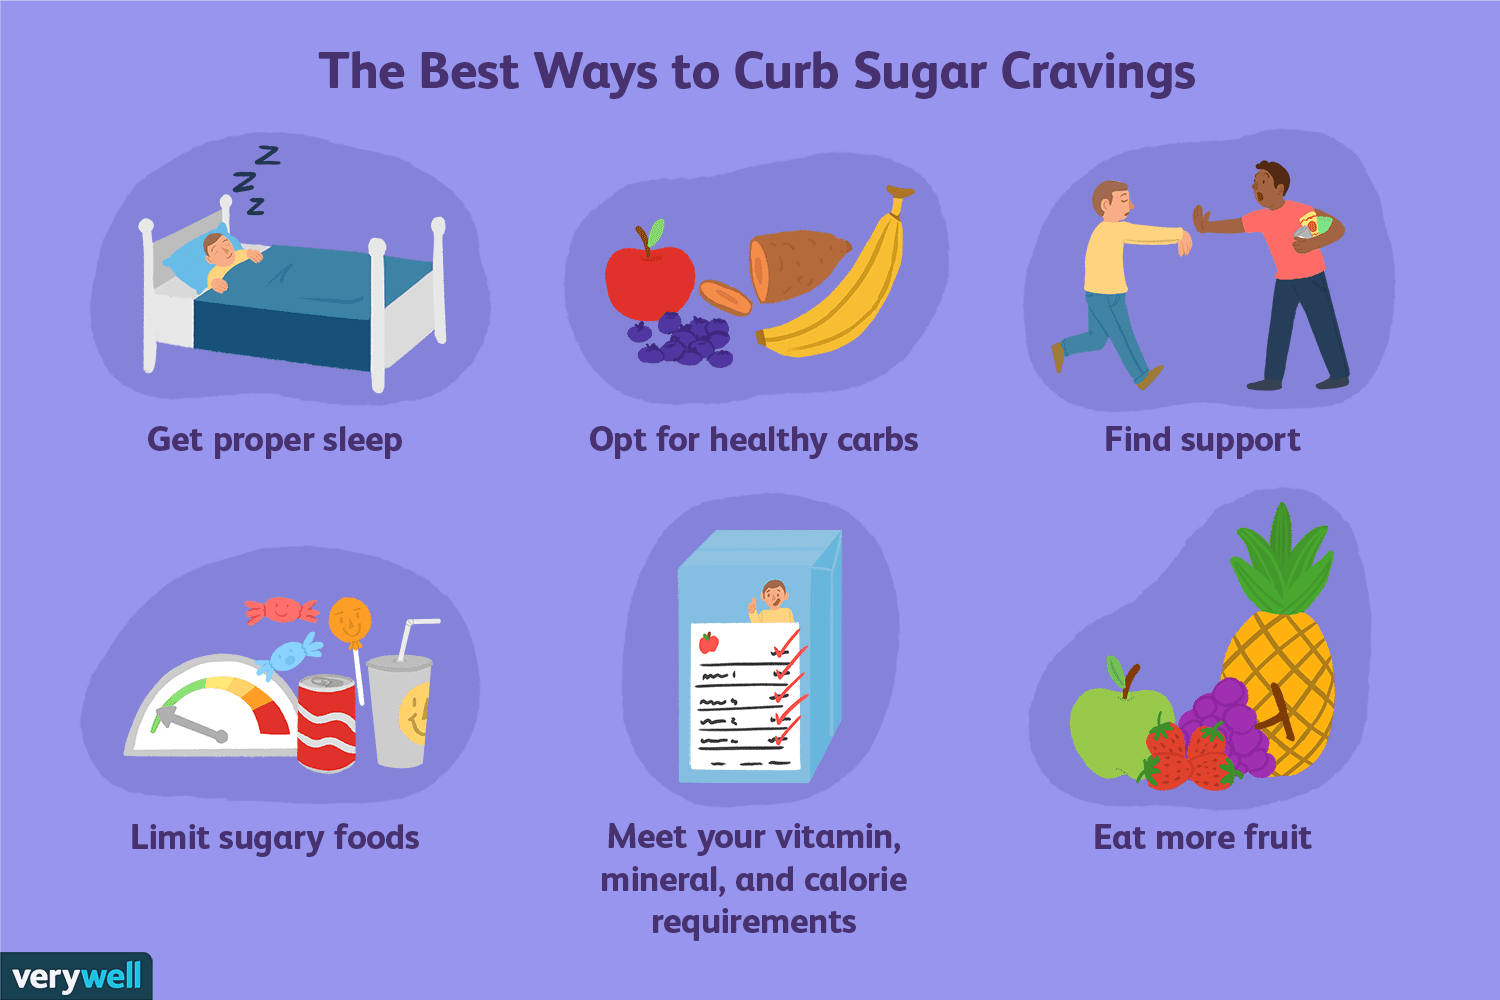 How to Help Curb Sugar Cravings